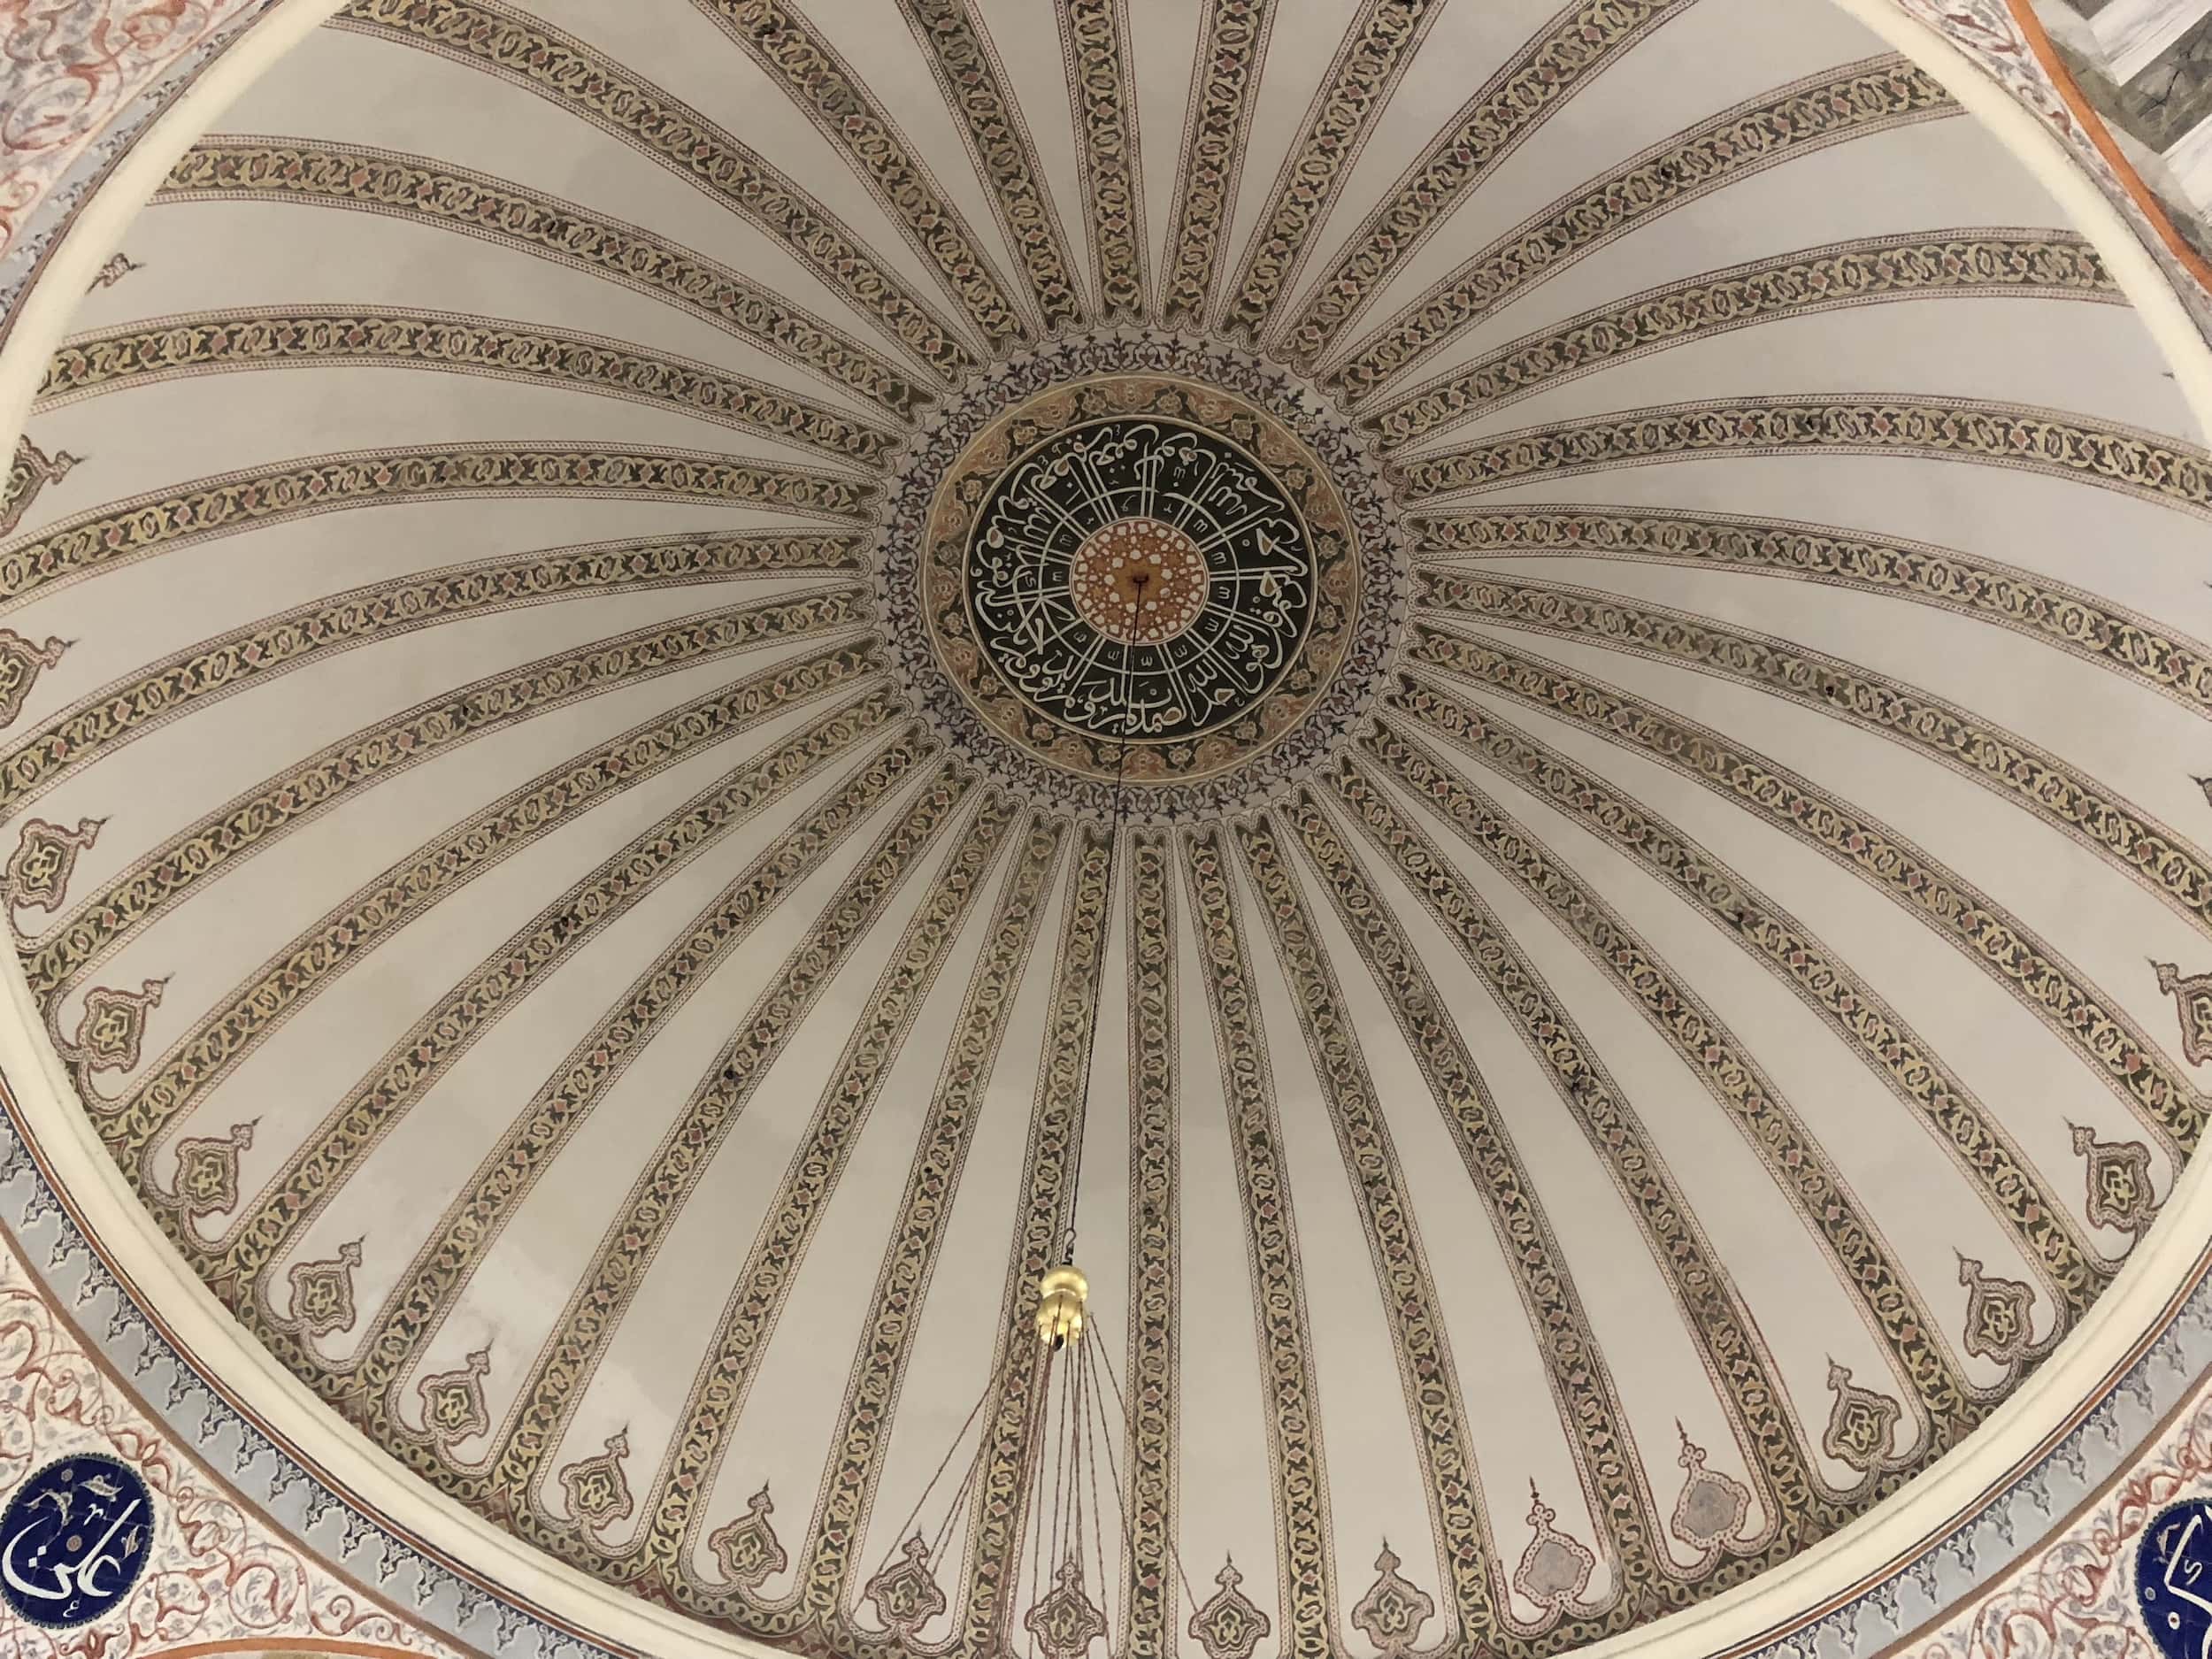 Dome of the tomb of Siyavuş Pasha in Eyüp, Istanbul, Turkey